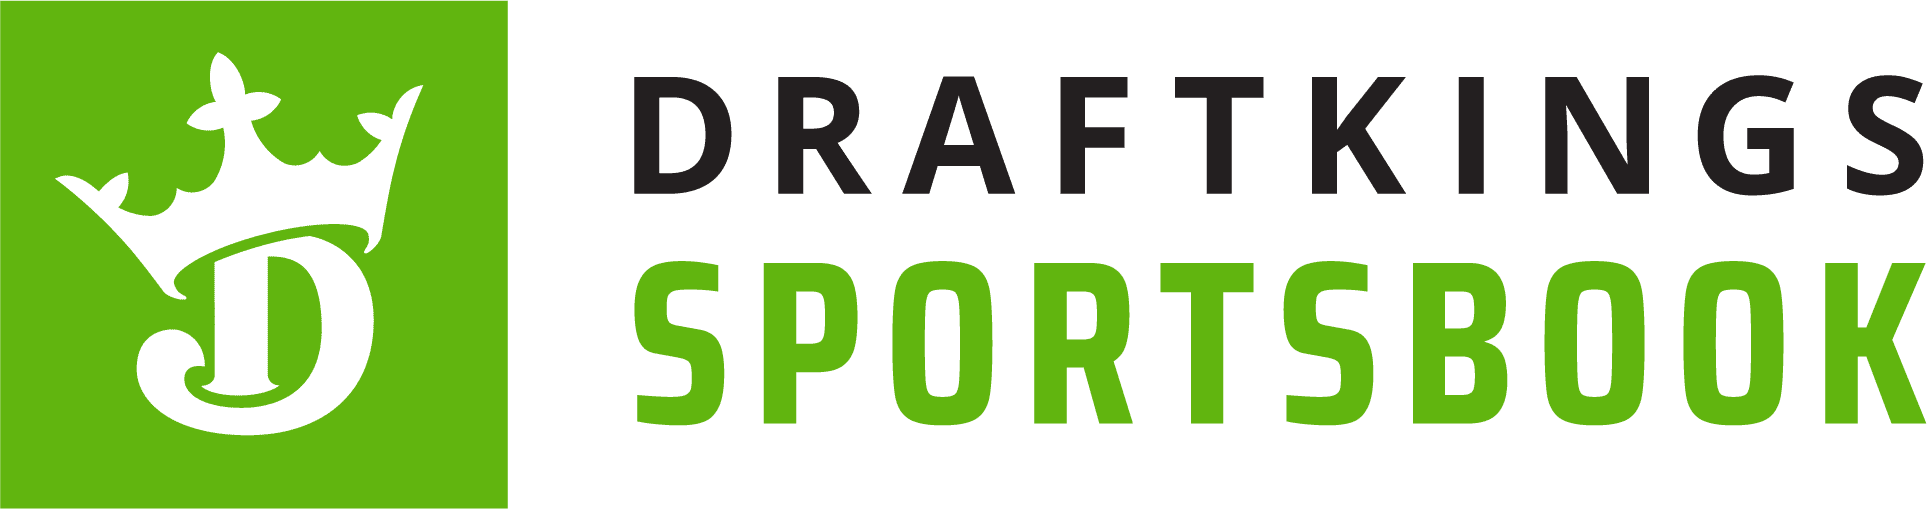 Draftkings Sportsbook review